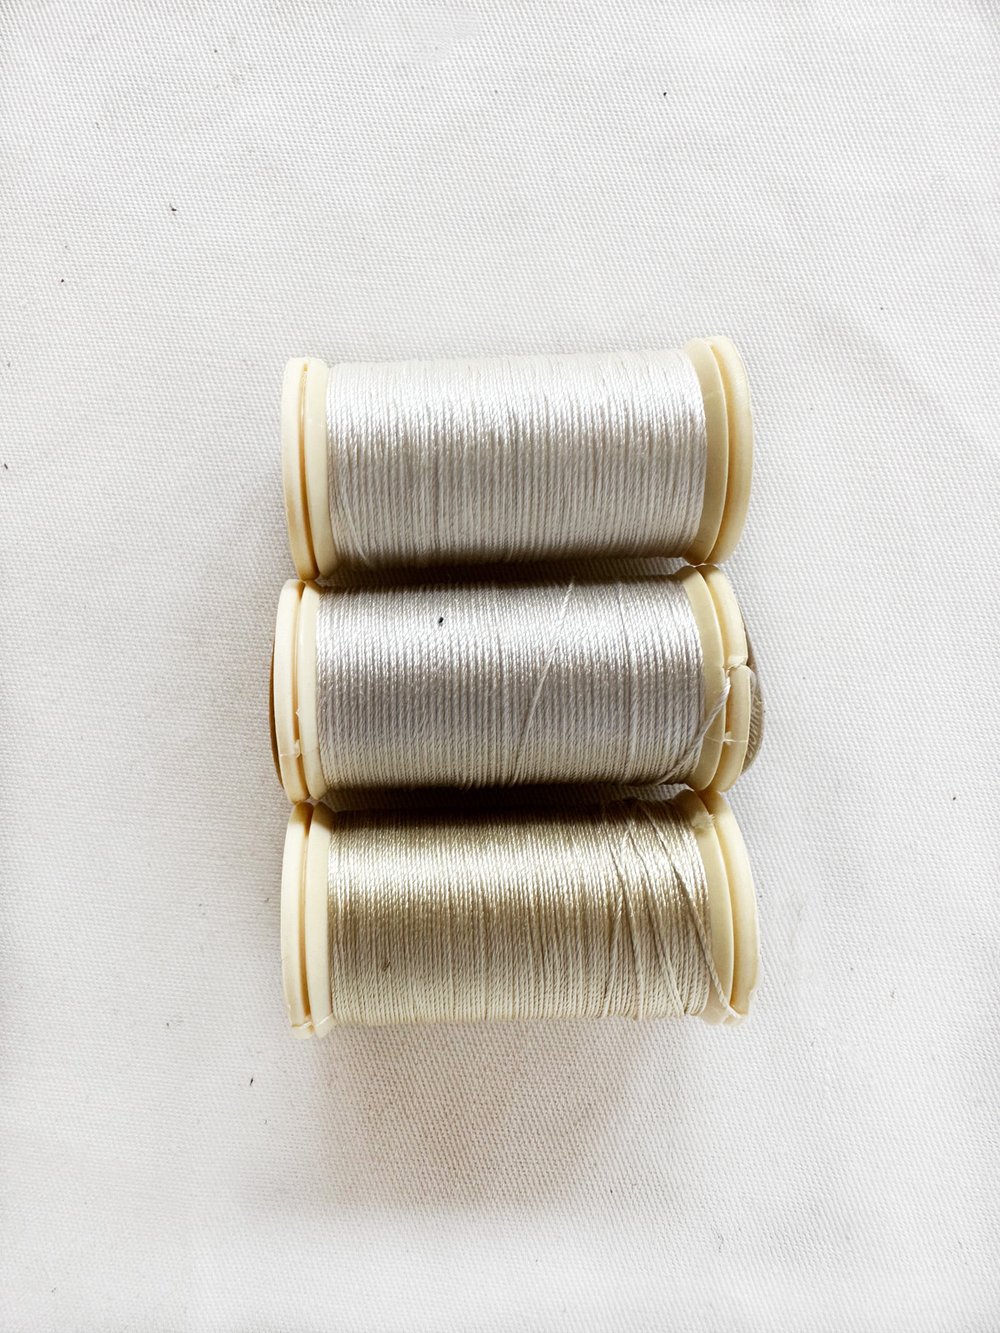 Maison Sajou Mending Needles — L'Etoffe Fabrics Online